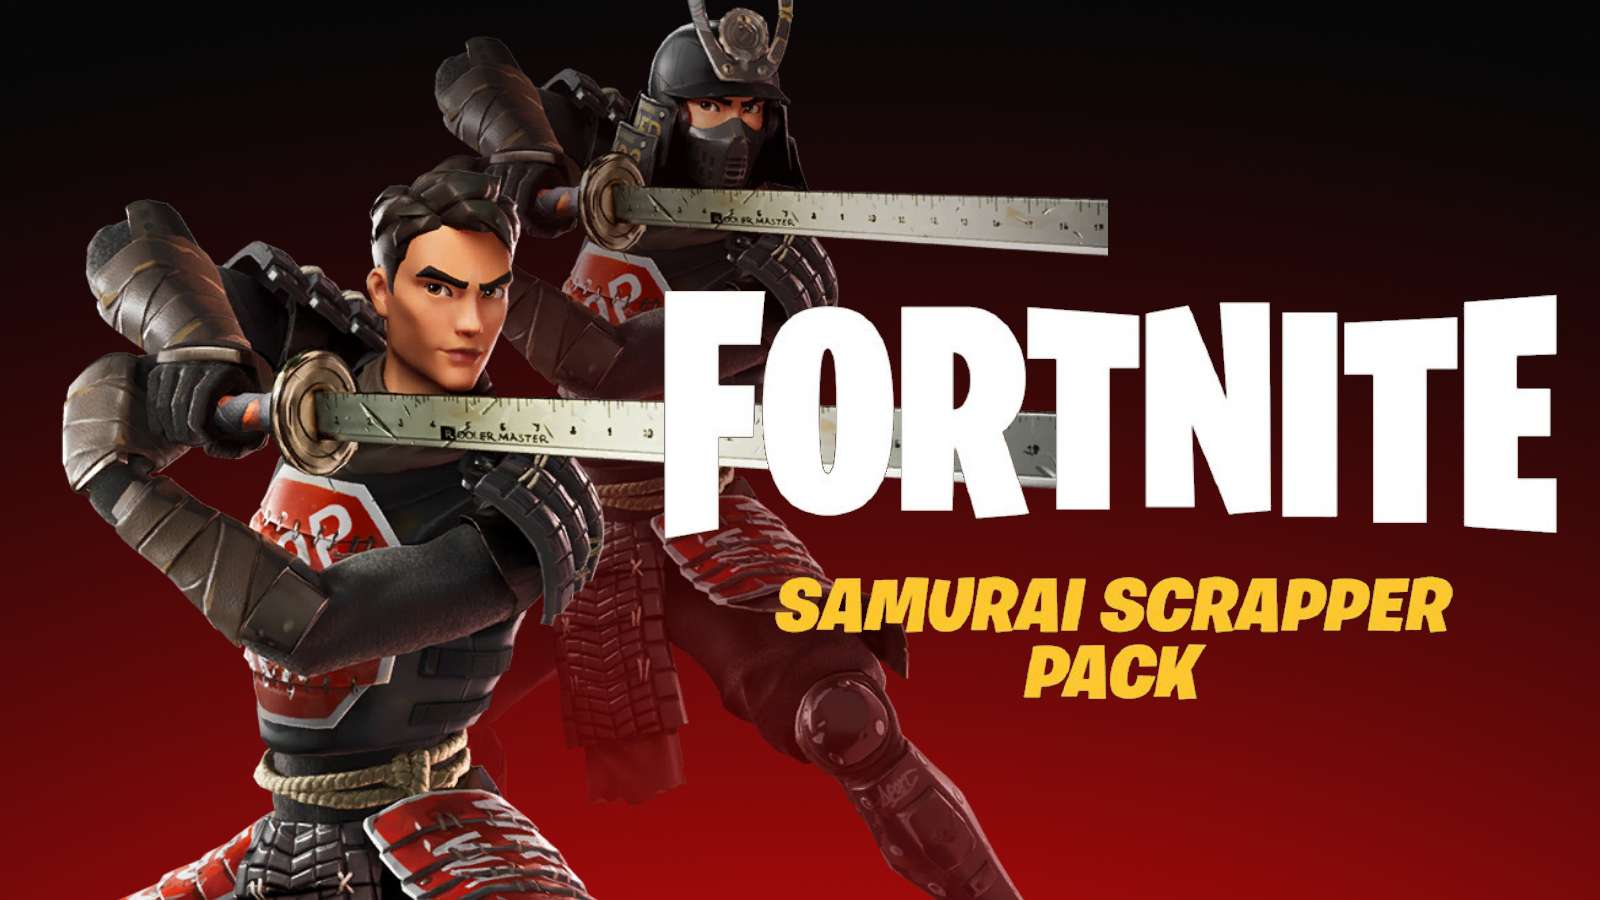 pack de Samurai Scrapper en Fortnite Temporada 4